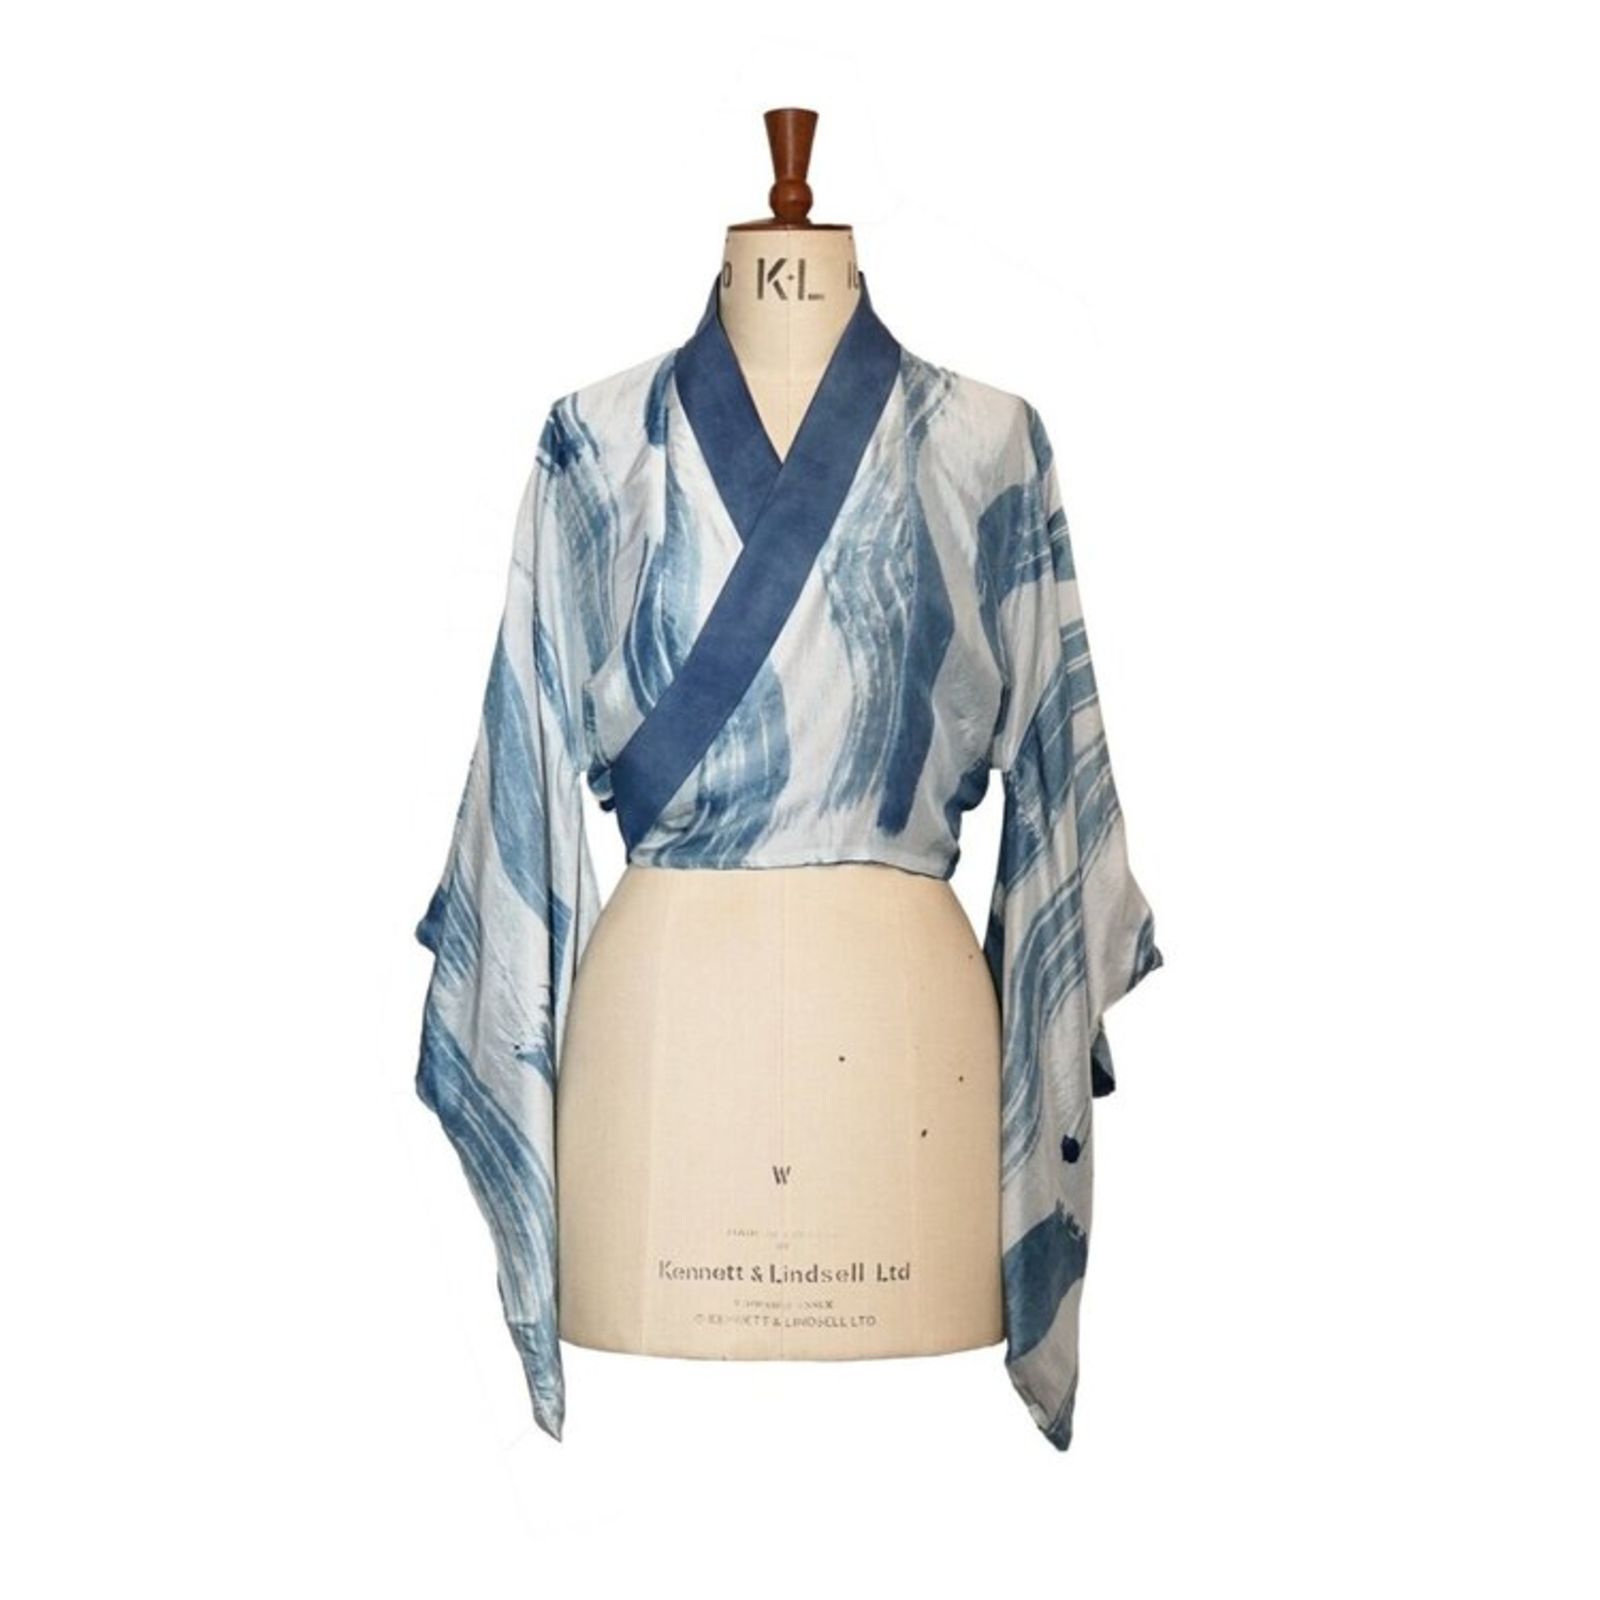 Vietnam's Traditional Indigo Dyes and Kimono Come Together in Kimono Ơi ...